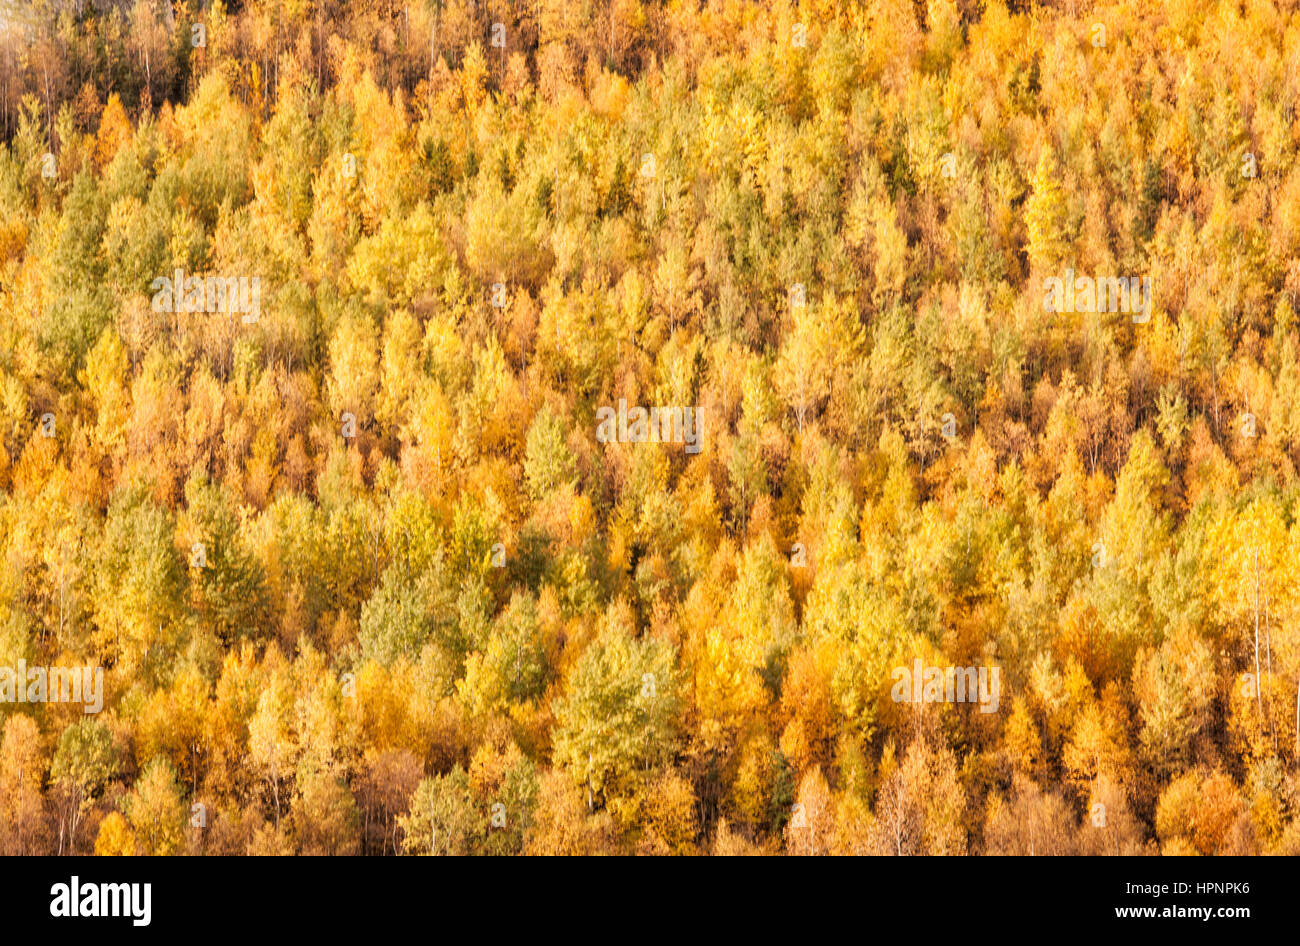 North America; Canada; Yukon Territory; Coastal Range Mountains; Aspens; Autumn colors. Stock Photo